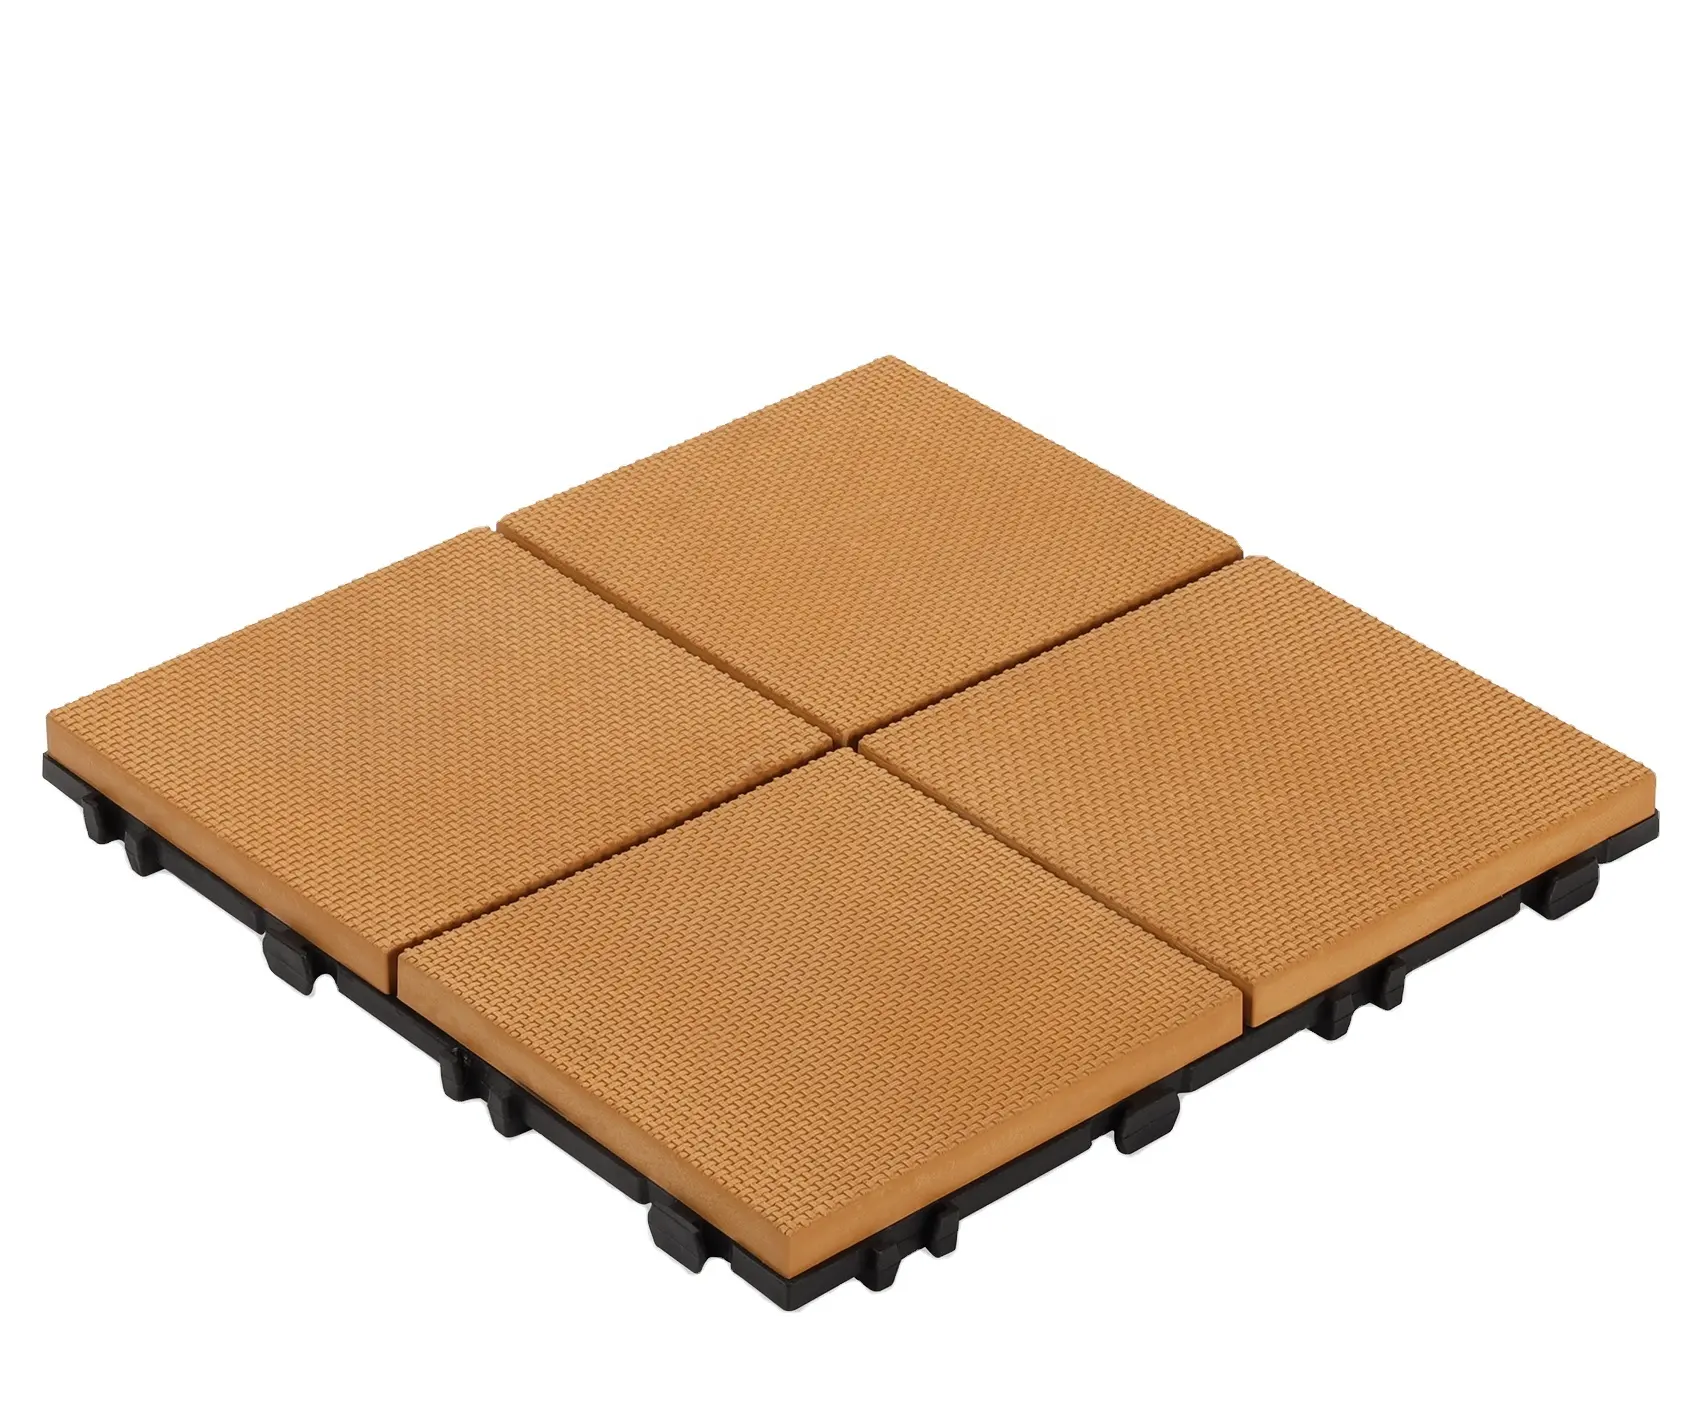 Baralho composto intertravamento durável, azulejos wpc telha de plástico XF-N010-2 300*300*25mm